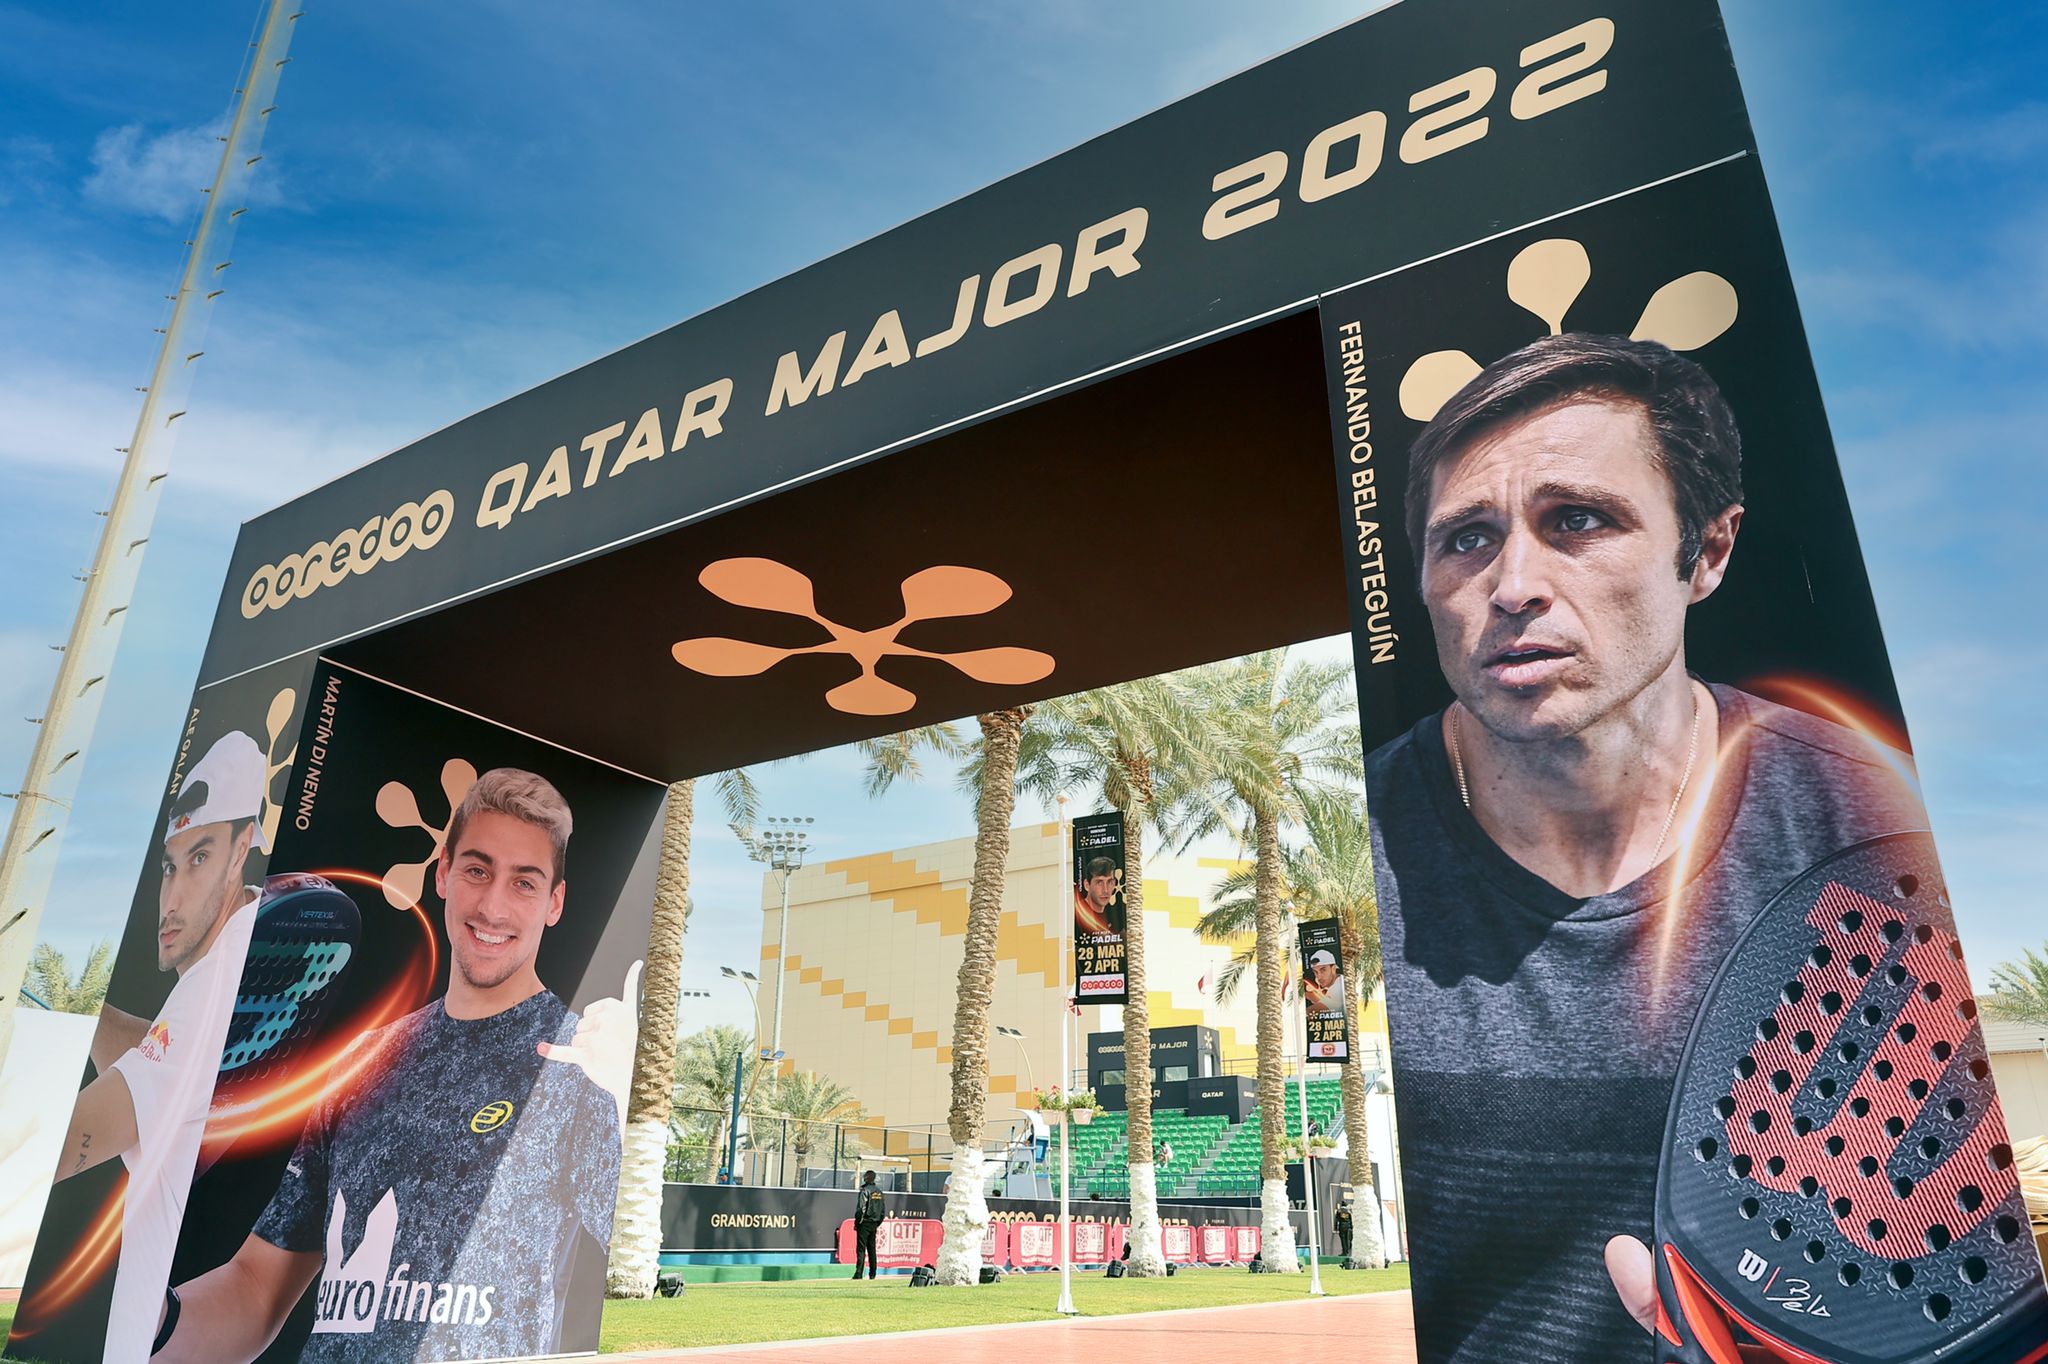 Ooredoo Katar Major 2022 Premier Padel affiche